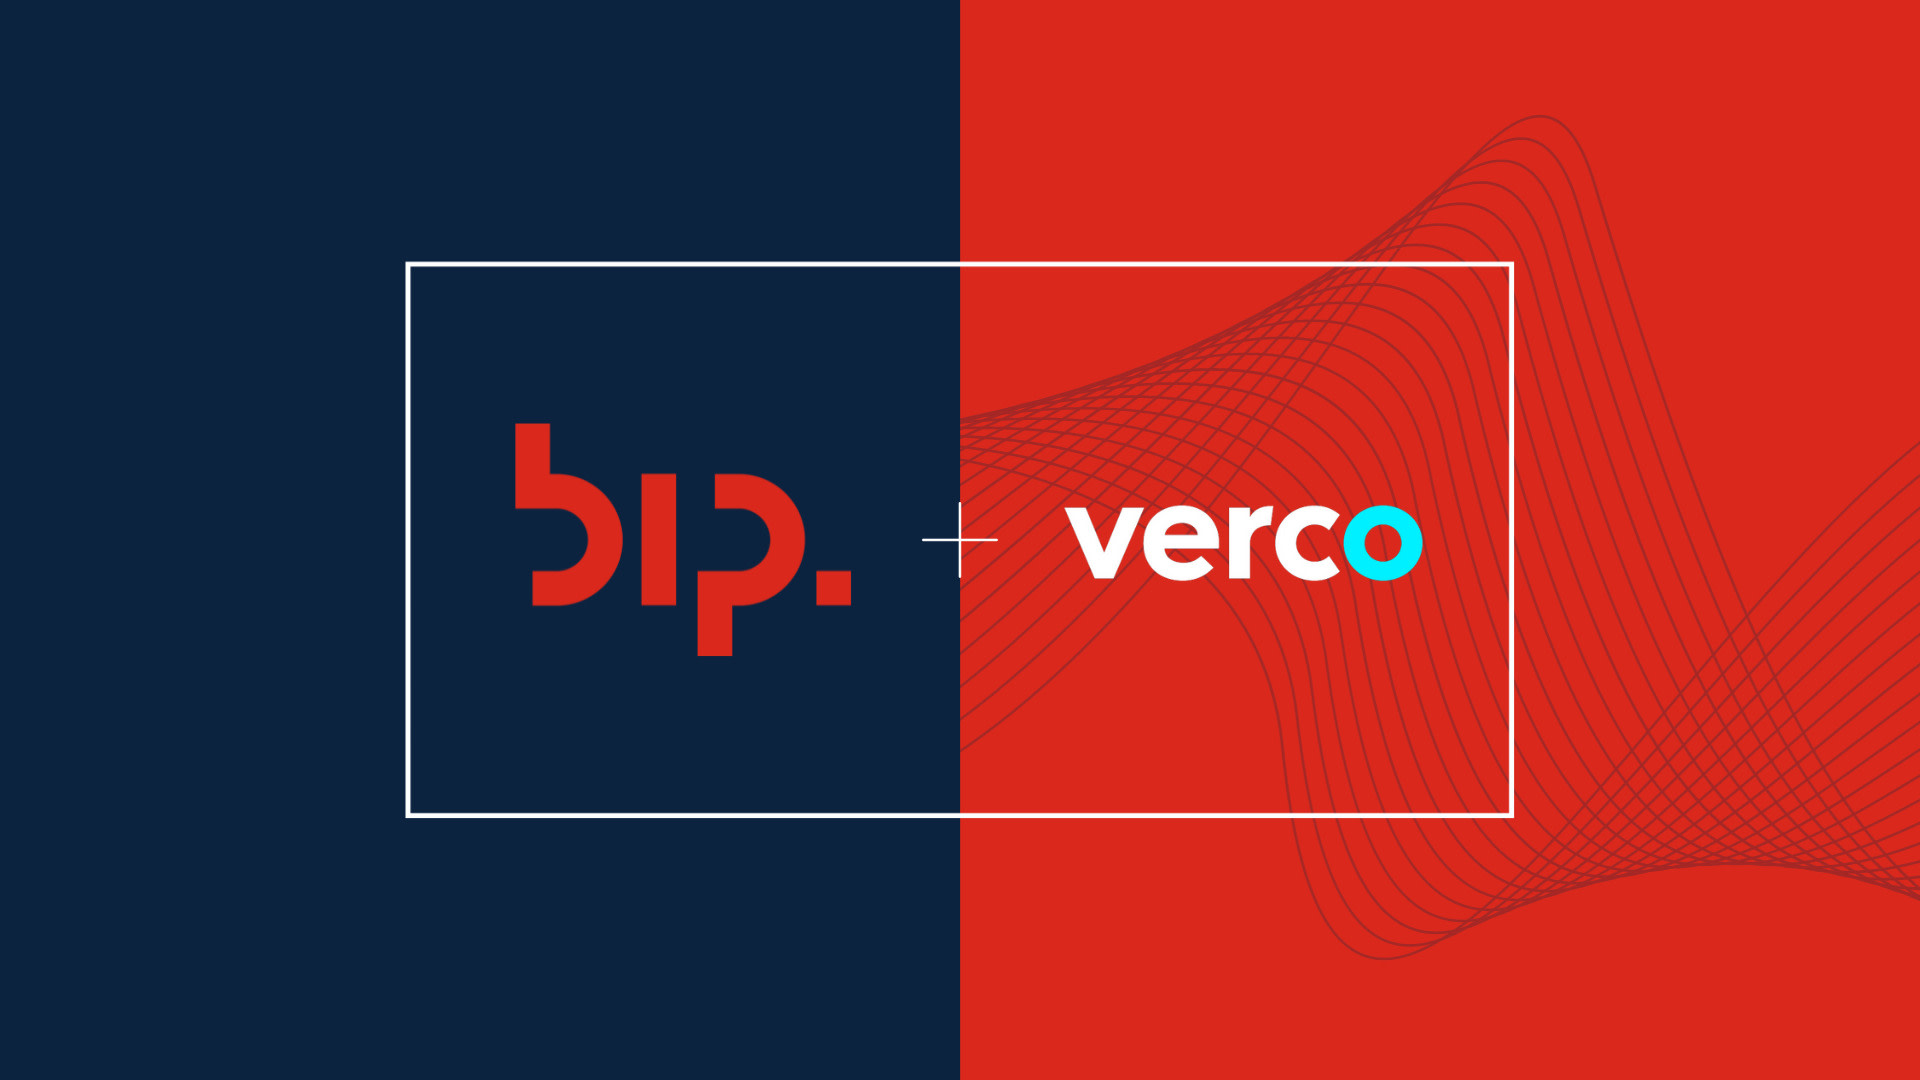 KnowESG_BIP Acquires Verco, Going Net Zero